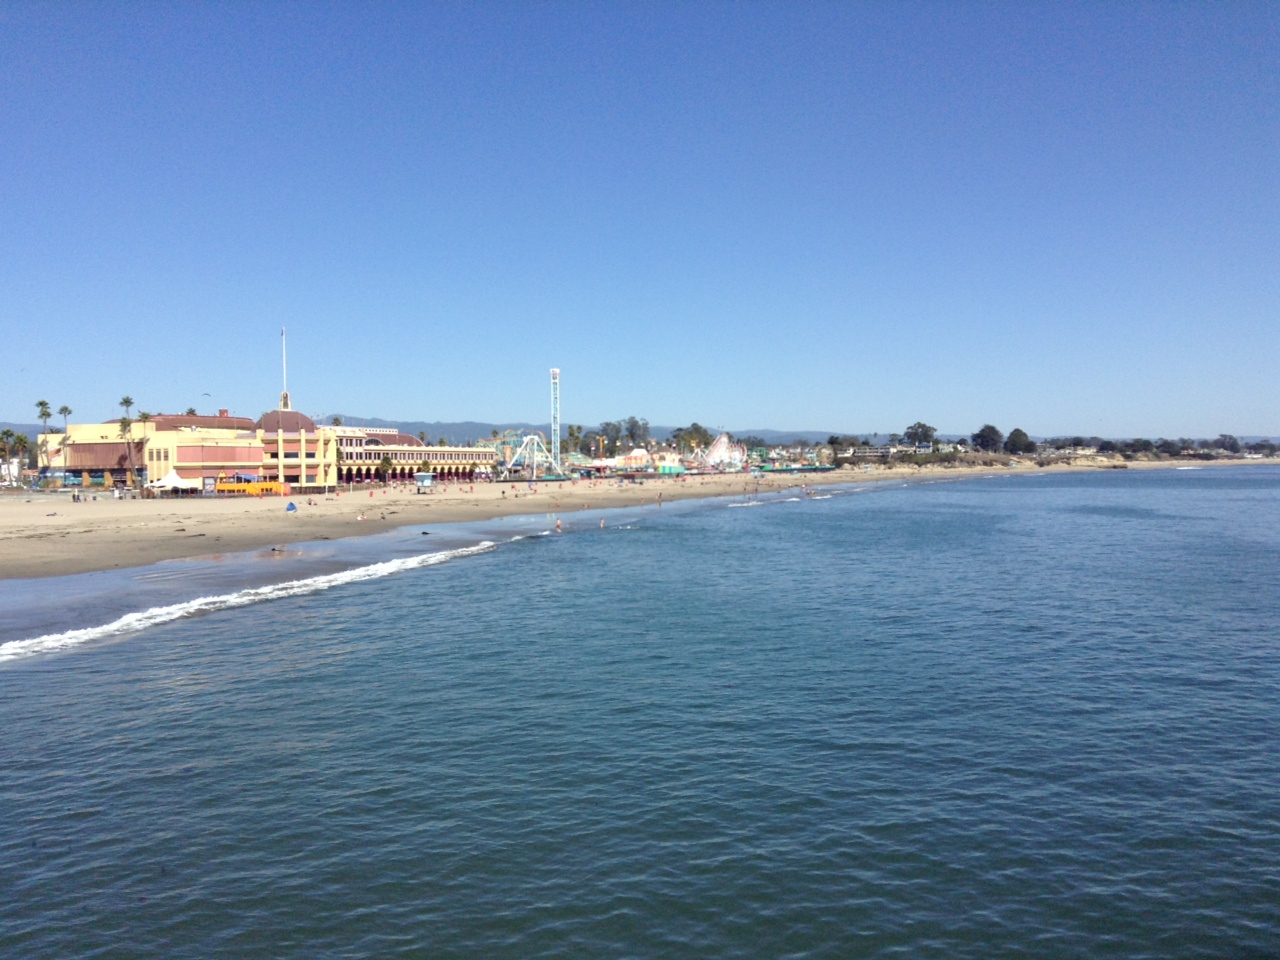 Santa Cruz boardwalk as seen a few hundred feet down pier